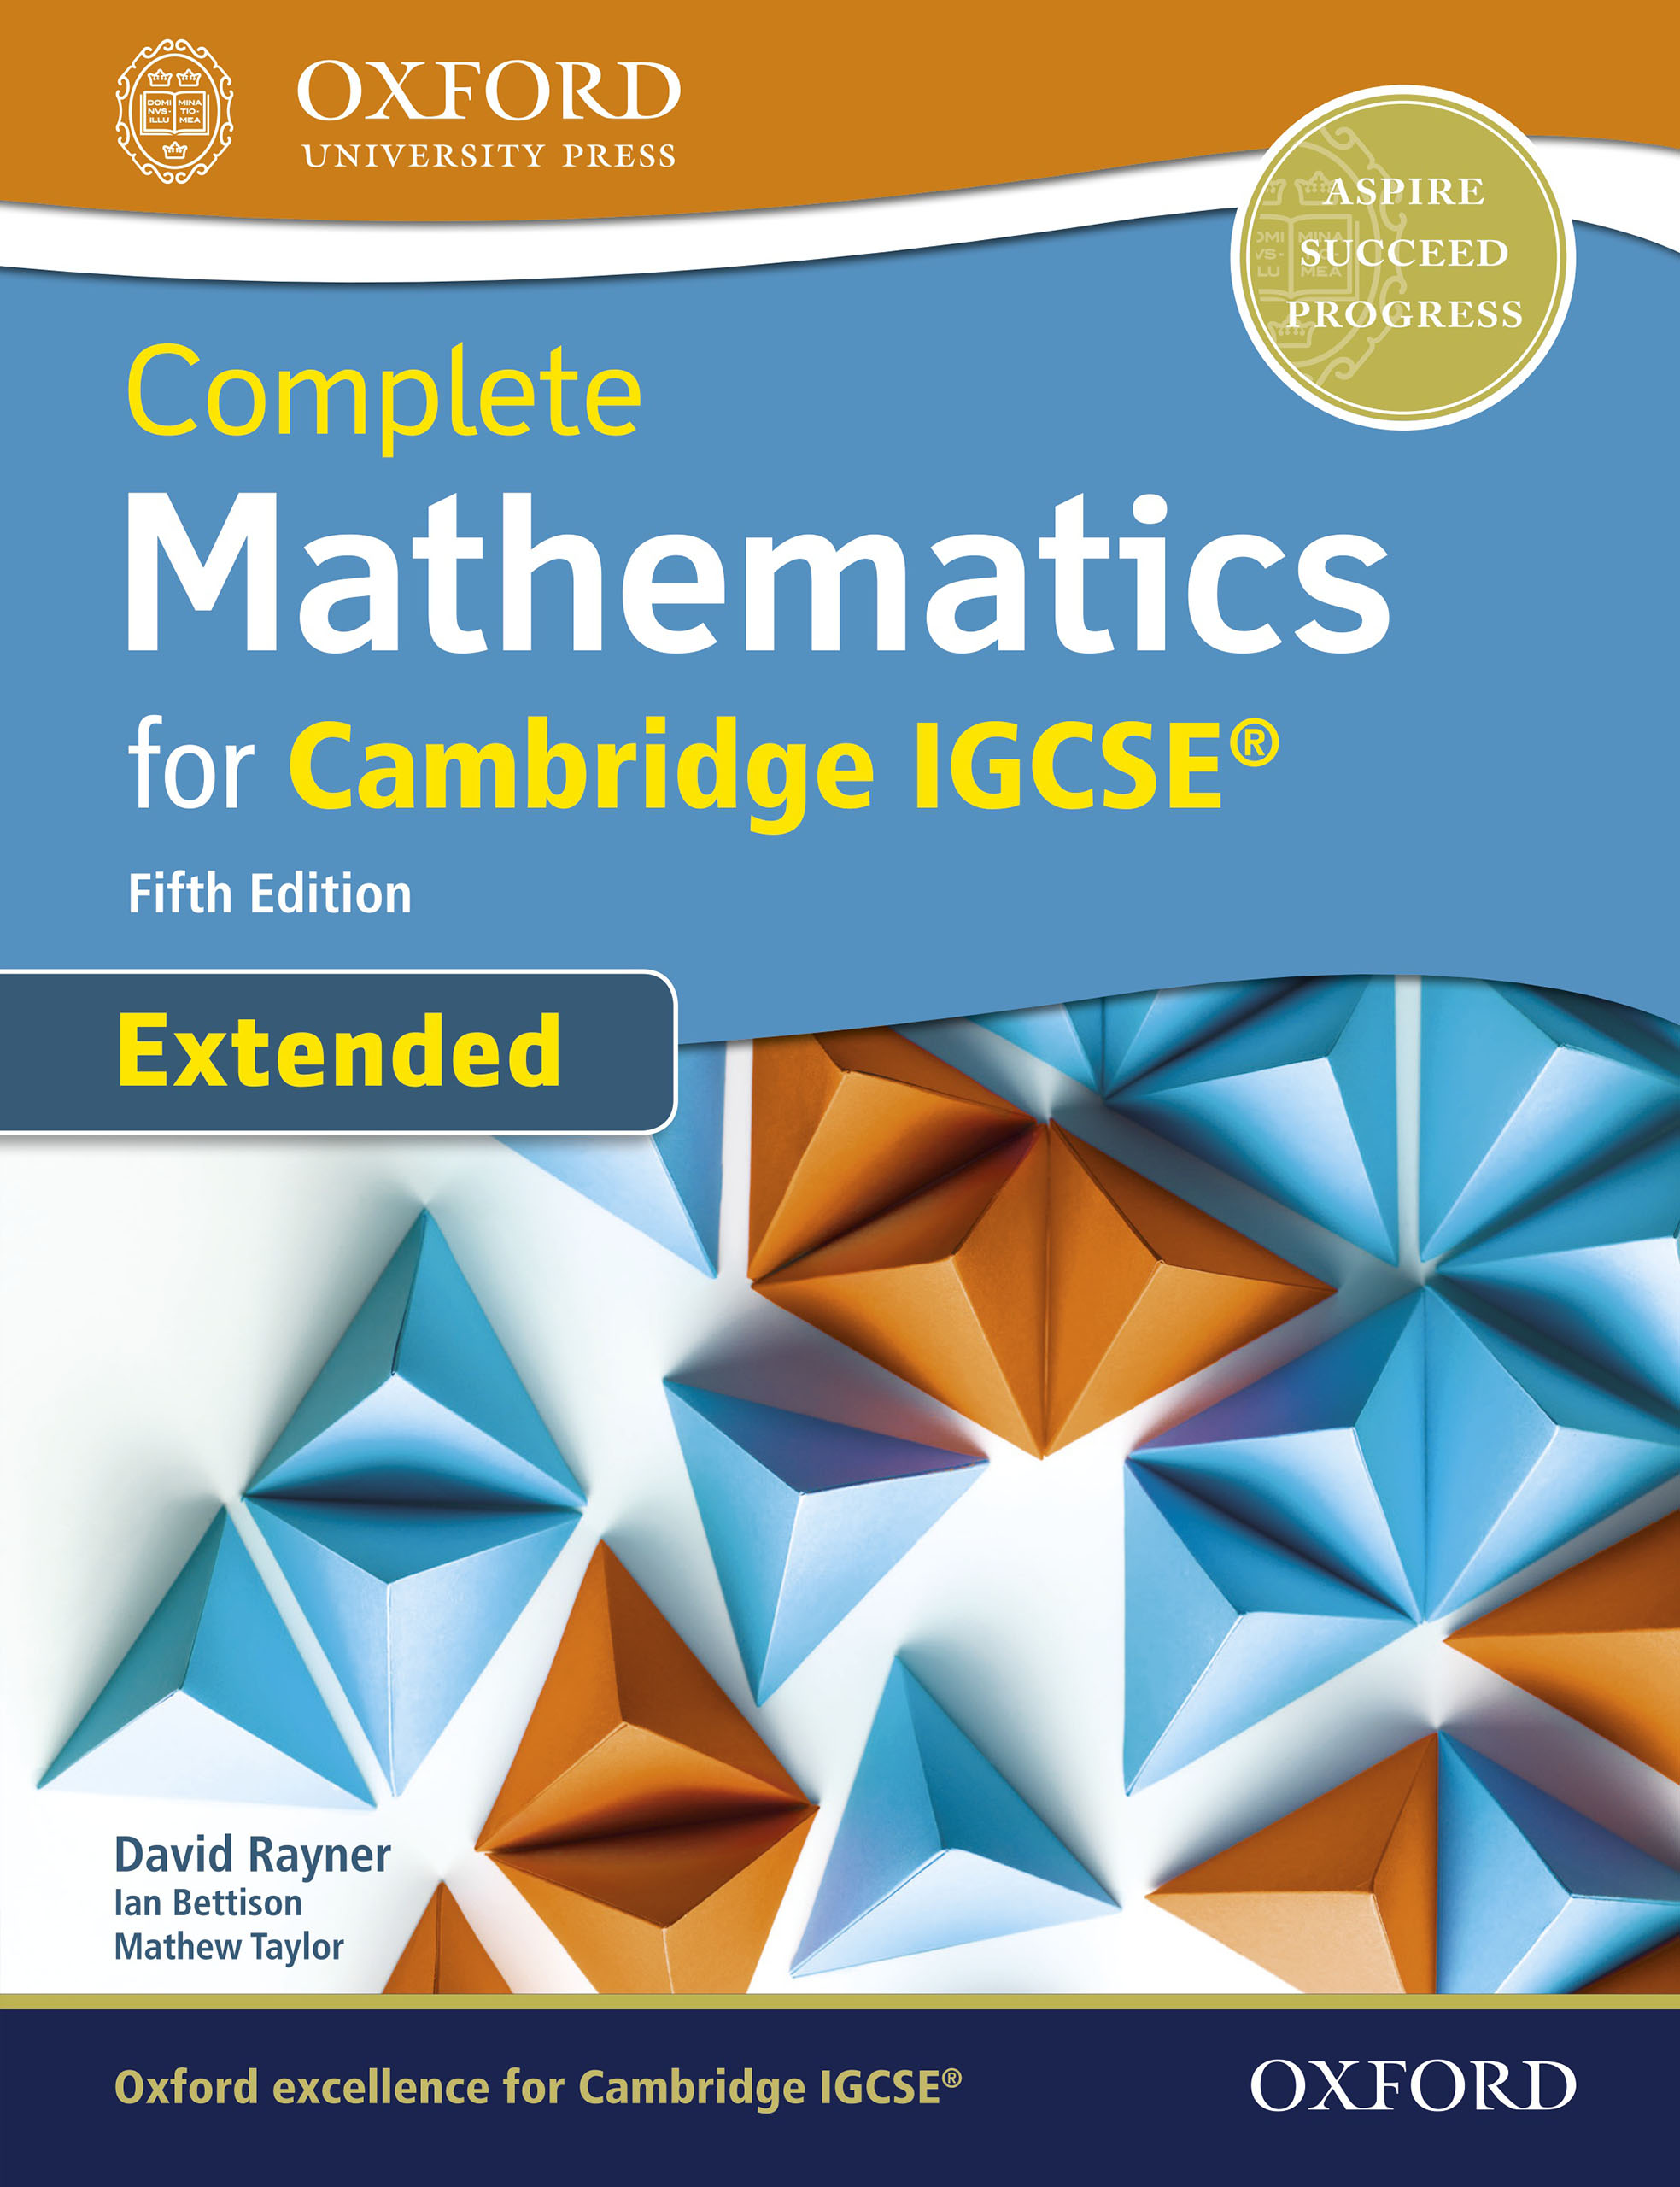 maths book review pdf